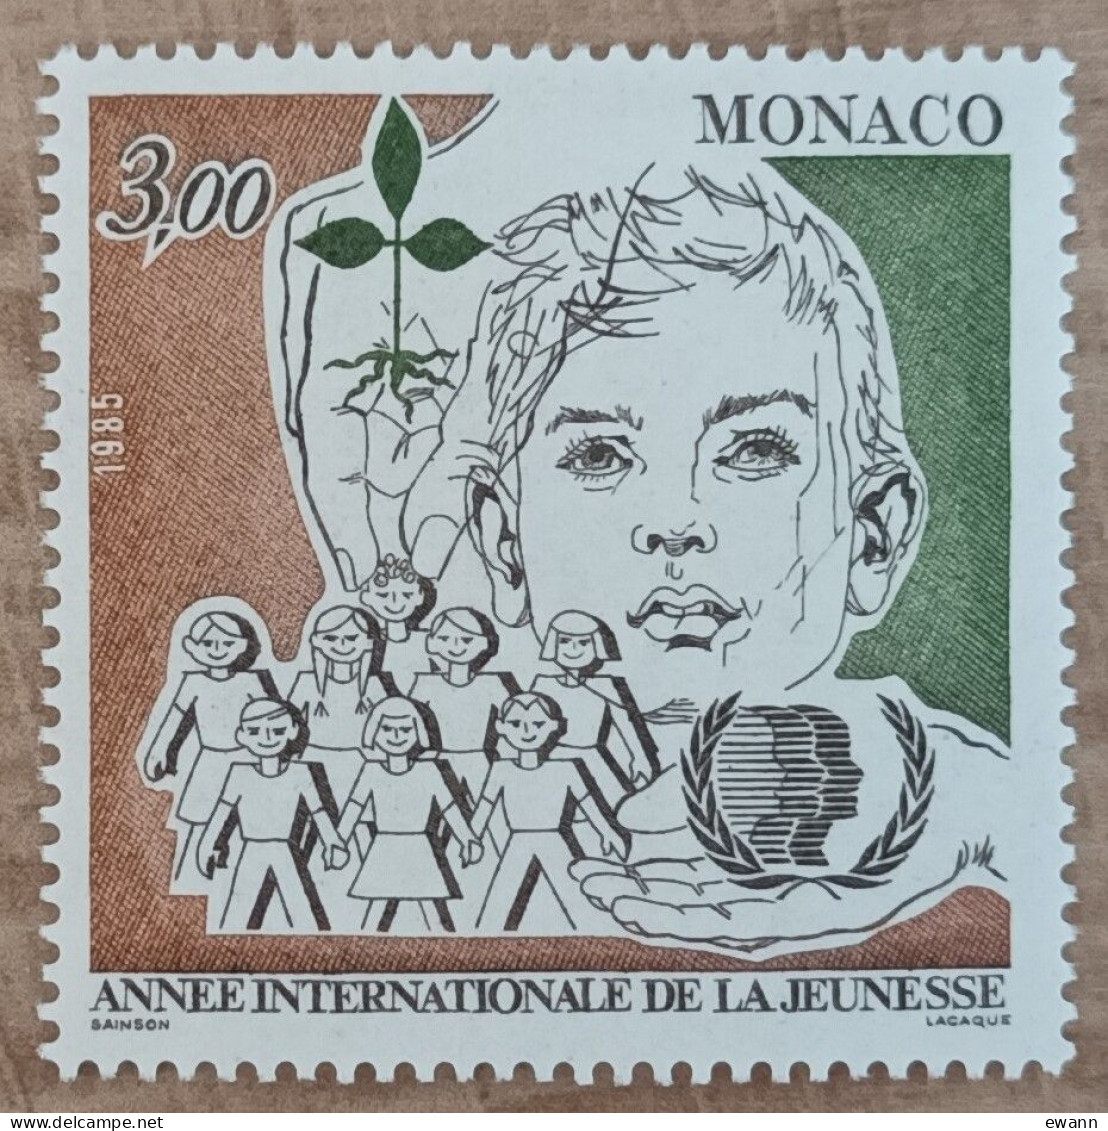 Monaco - YT N°1478 - Année Internationale De La Jeunesse - 1985 - Neuf - Nuevos